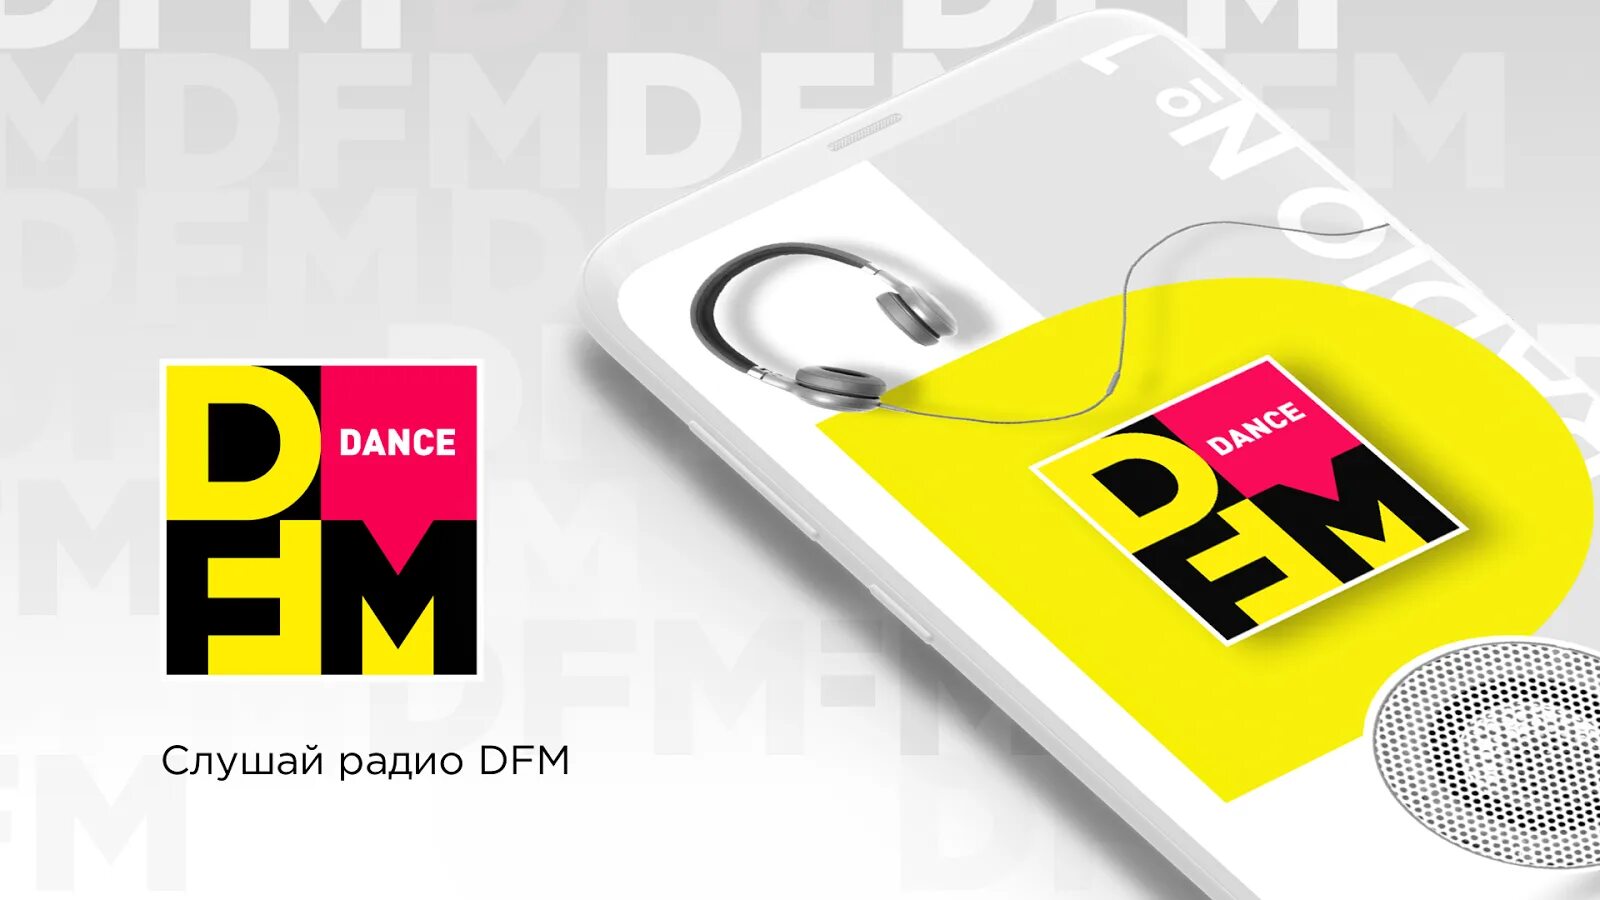 DFM. DFM радио. Сайт радиостанции DFM. Логотип ди ФМ. Фм радио ди фм в качестве